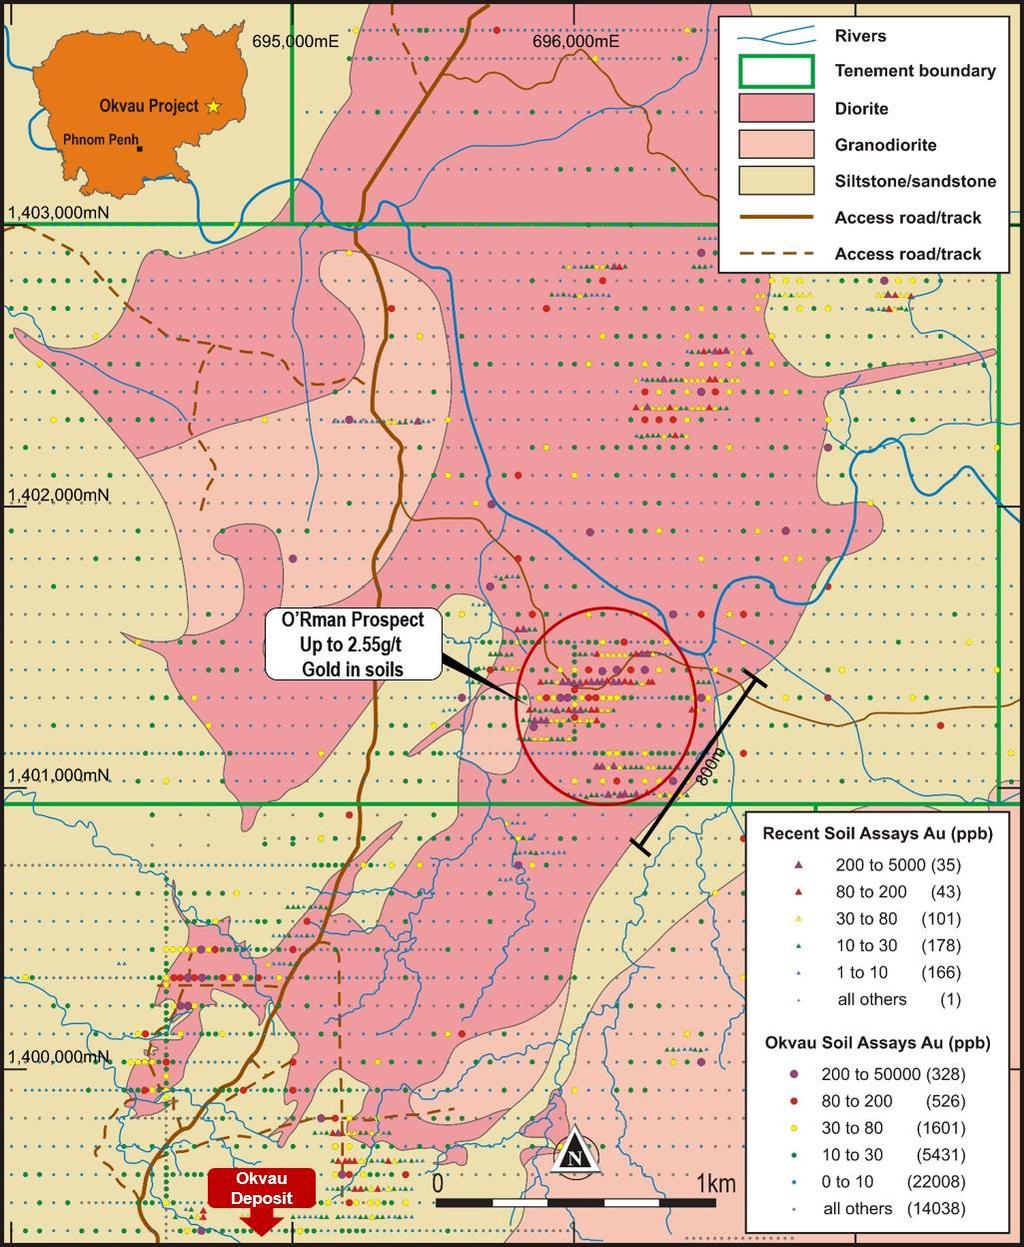 O Rman Prospect 6km North of Okvau Deposit 800m x 600m soil anomaly with up to 2.